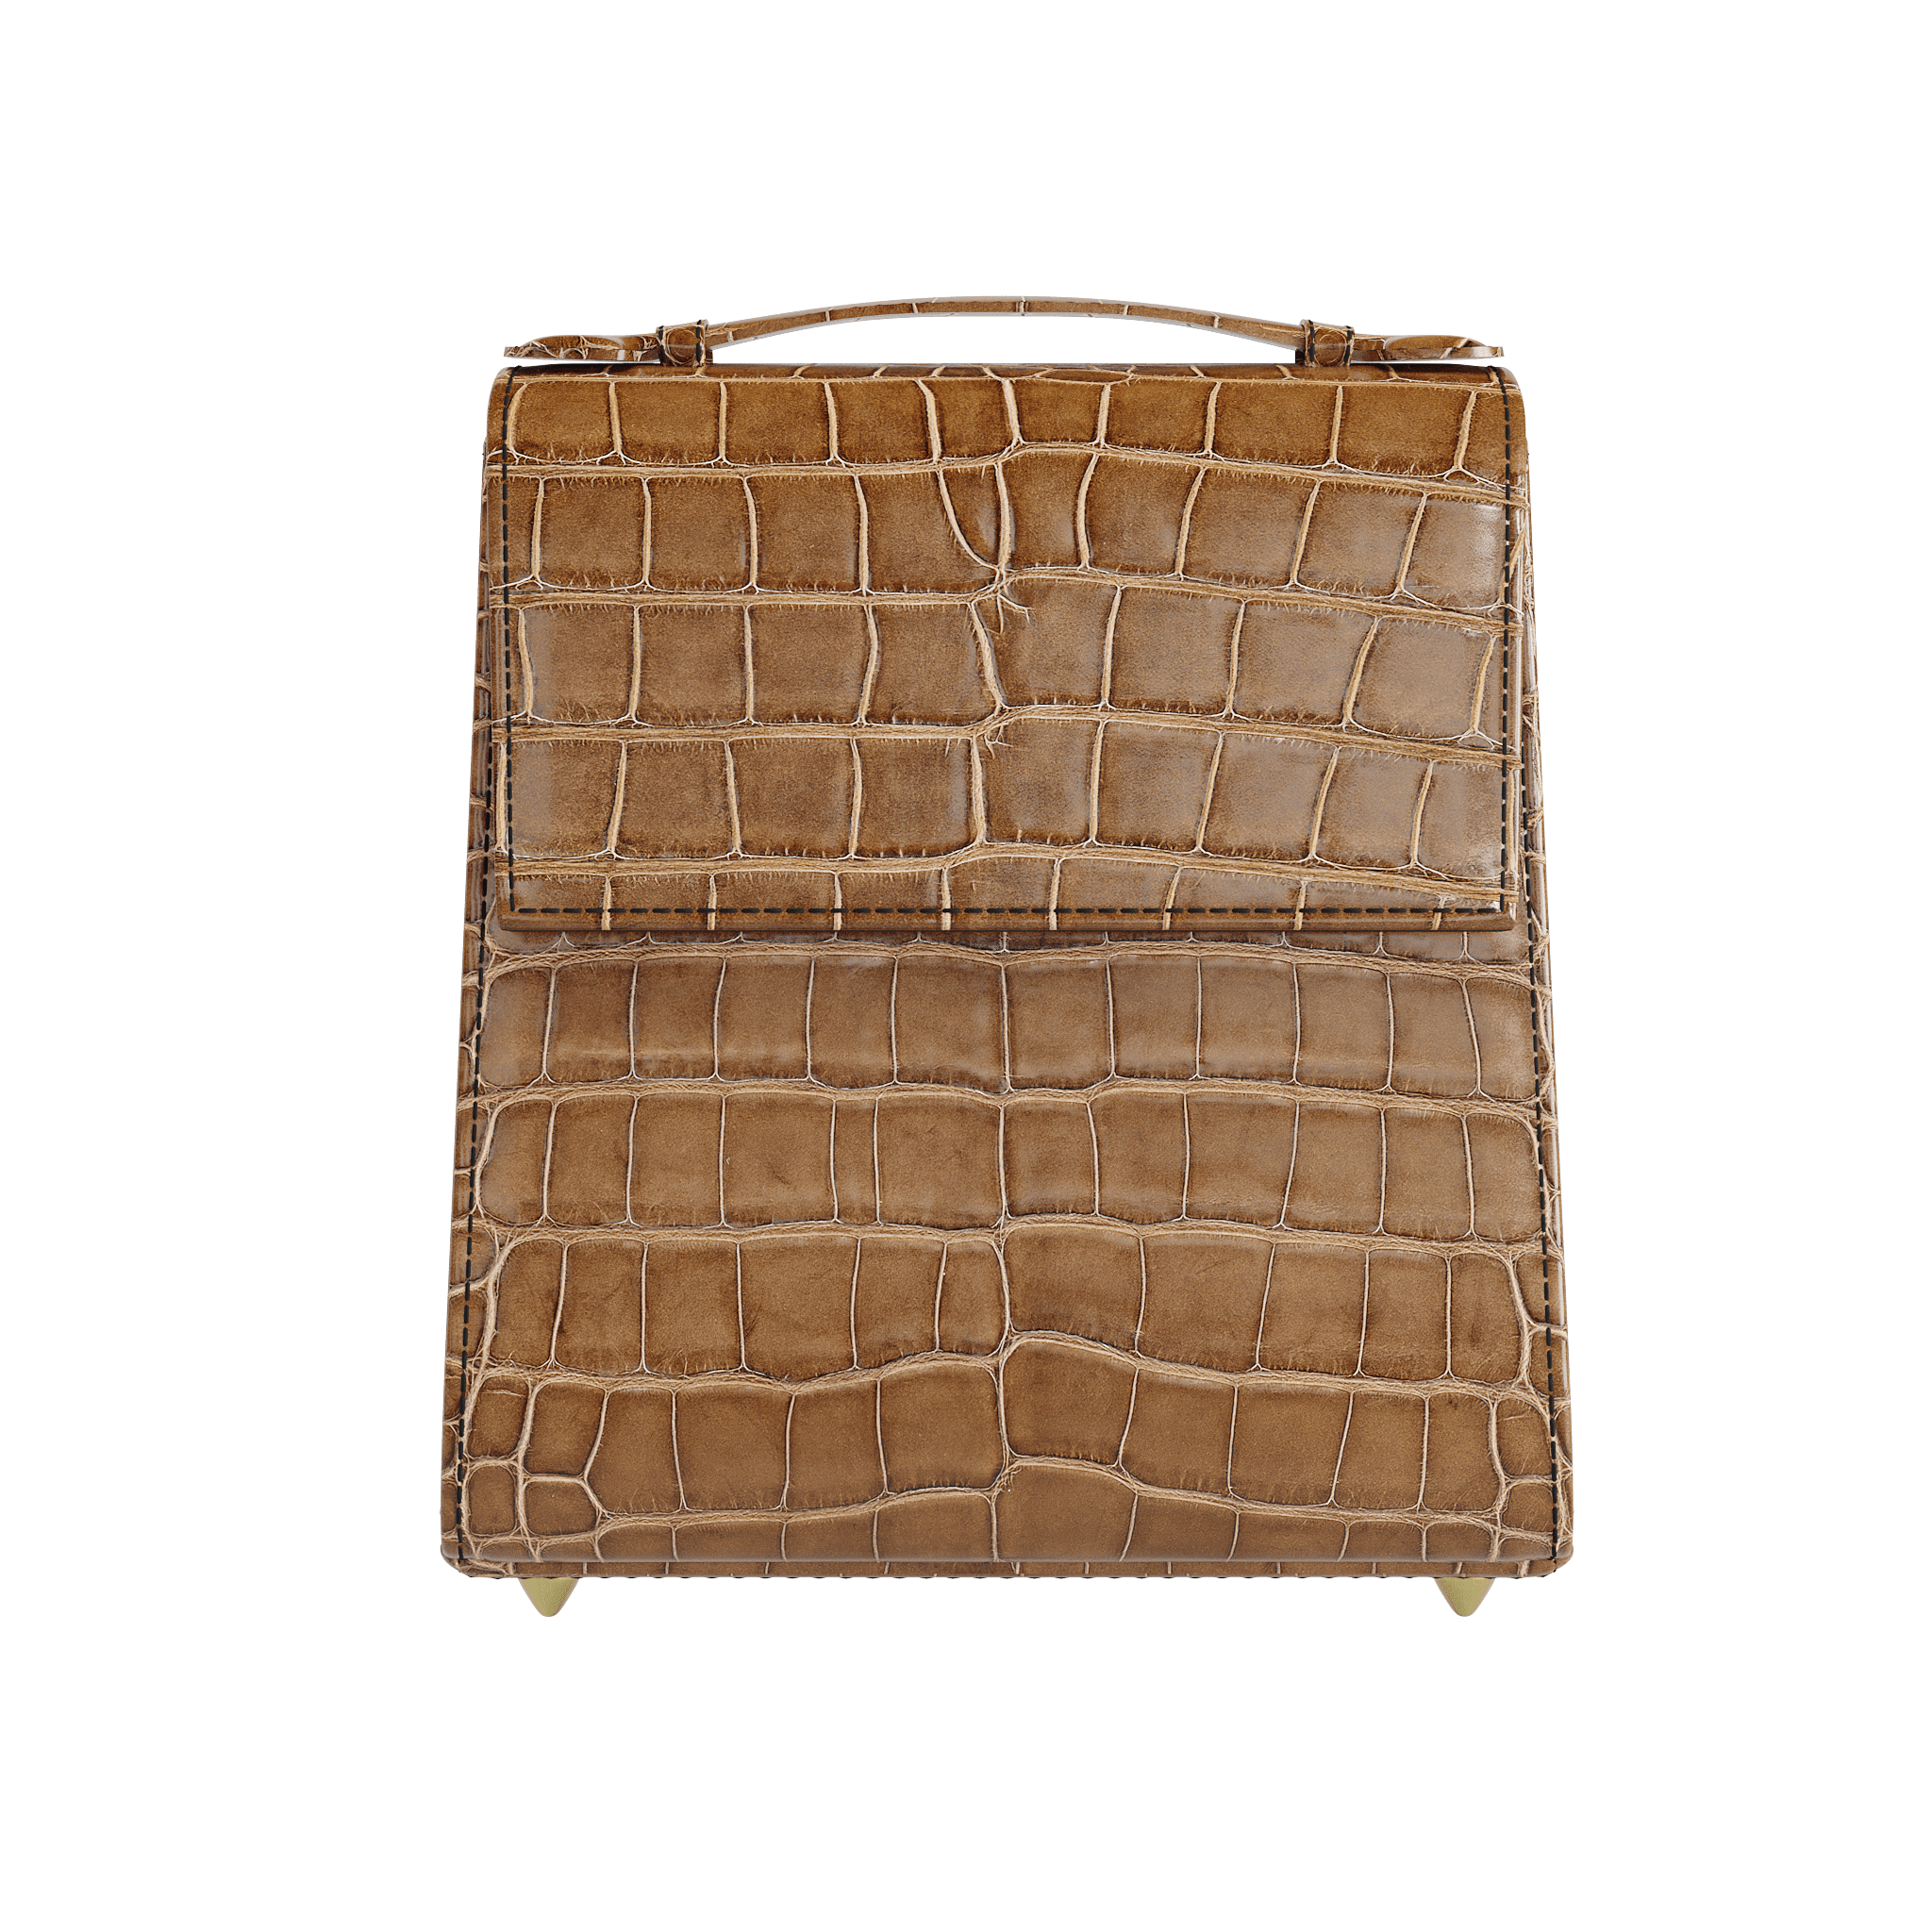 Authentic Luxury Brown Alligator Handbag With Box Style Design